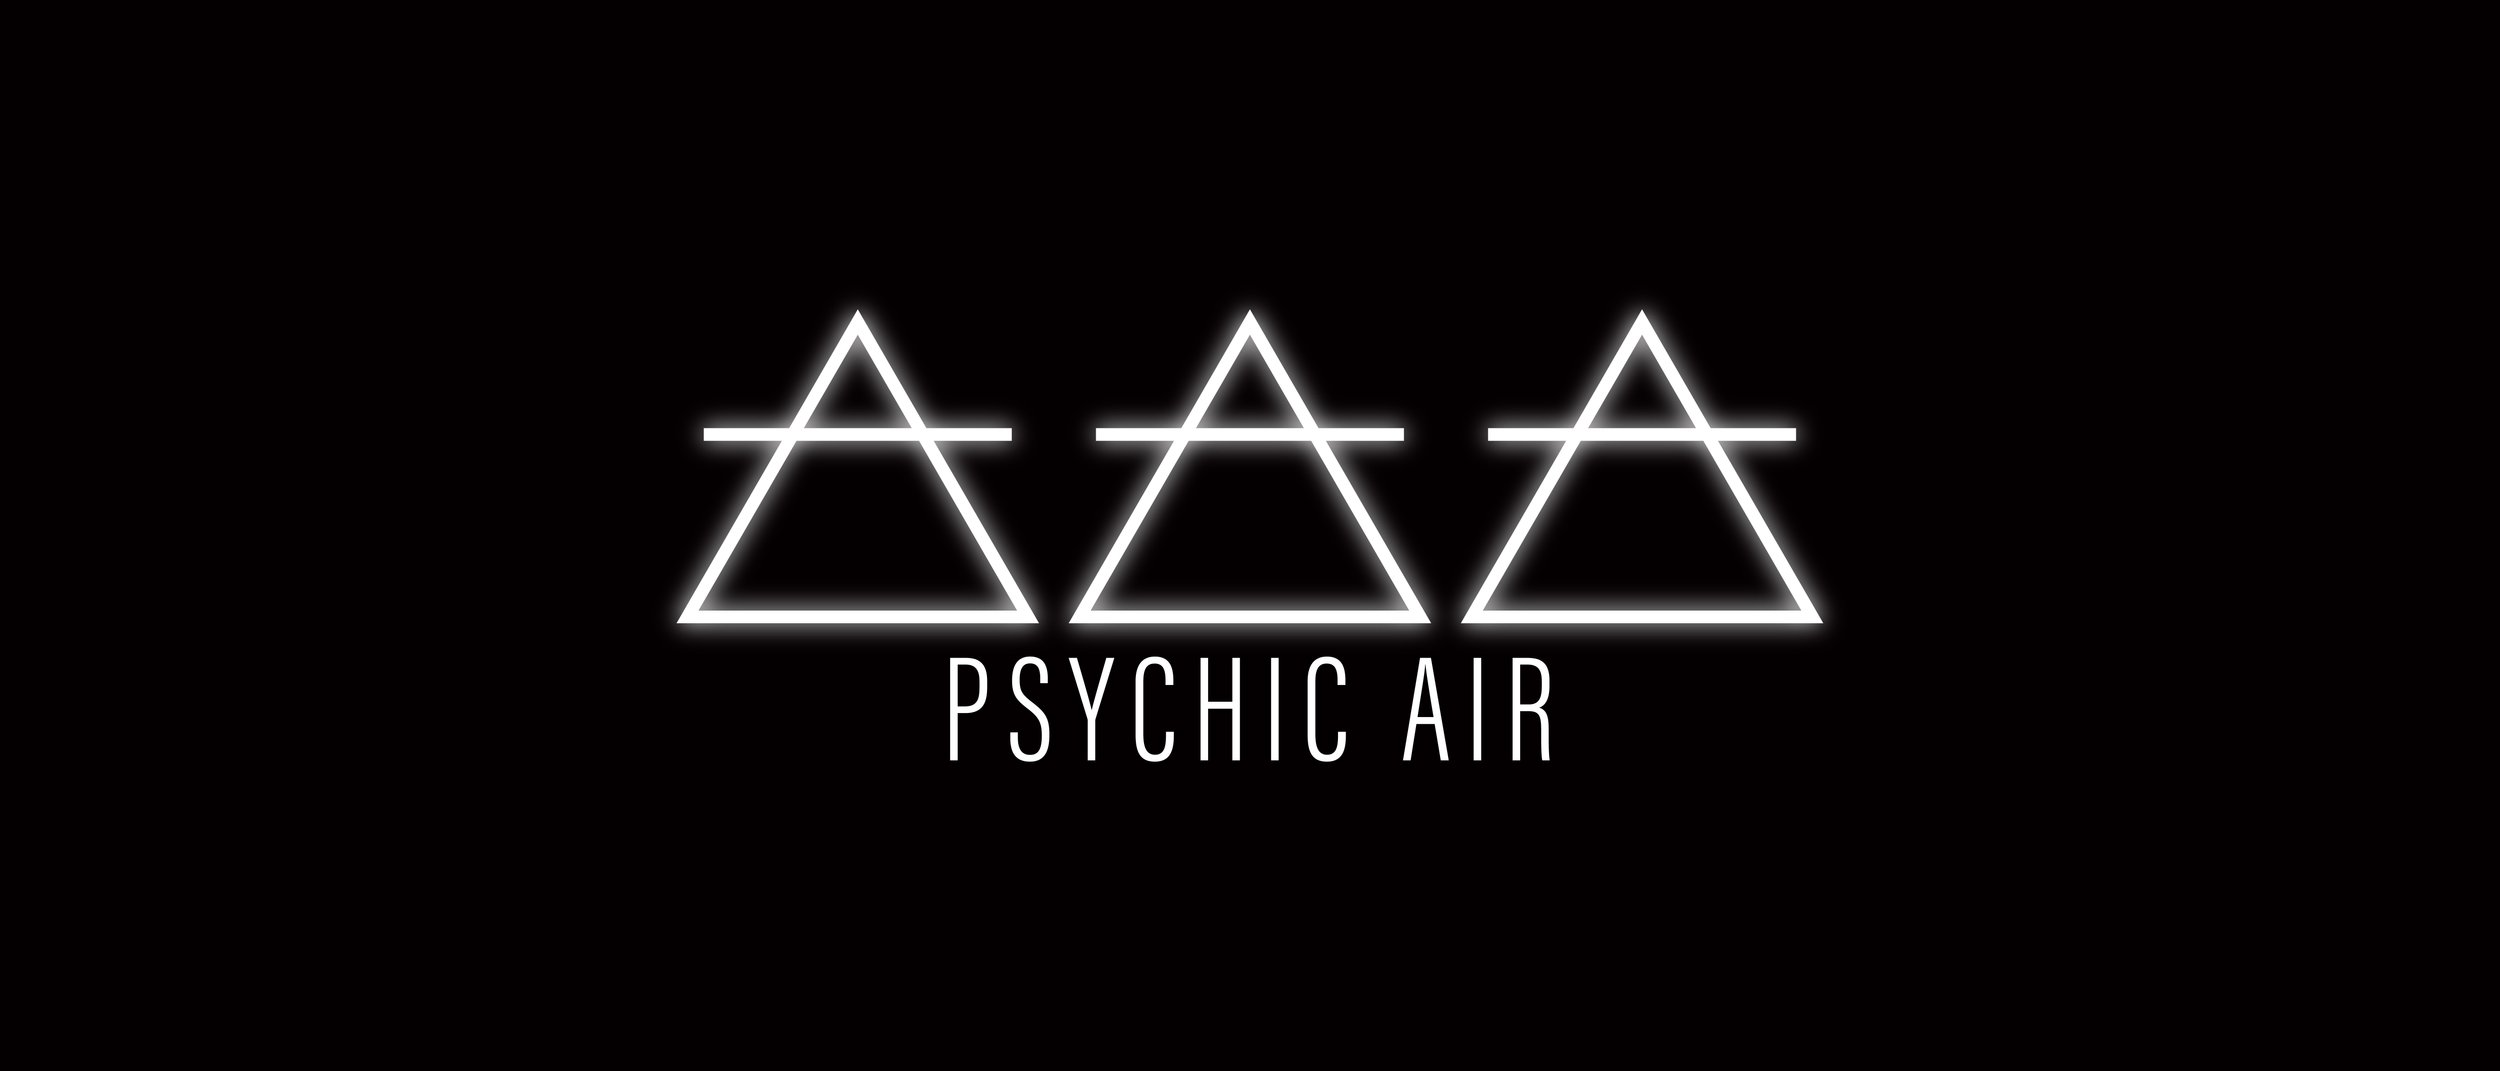 Psychic Air - Spotify header.jpg